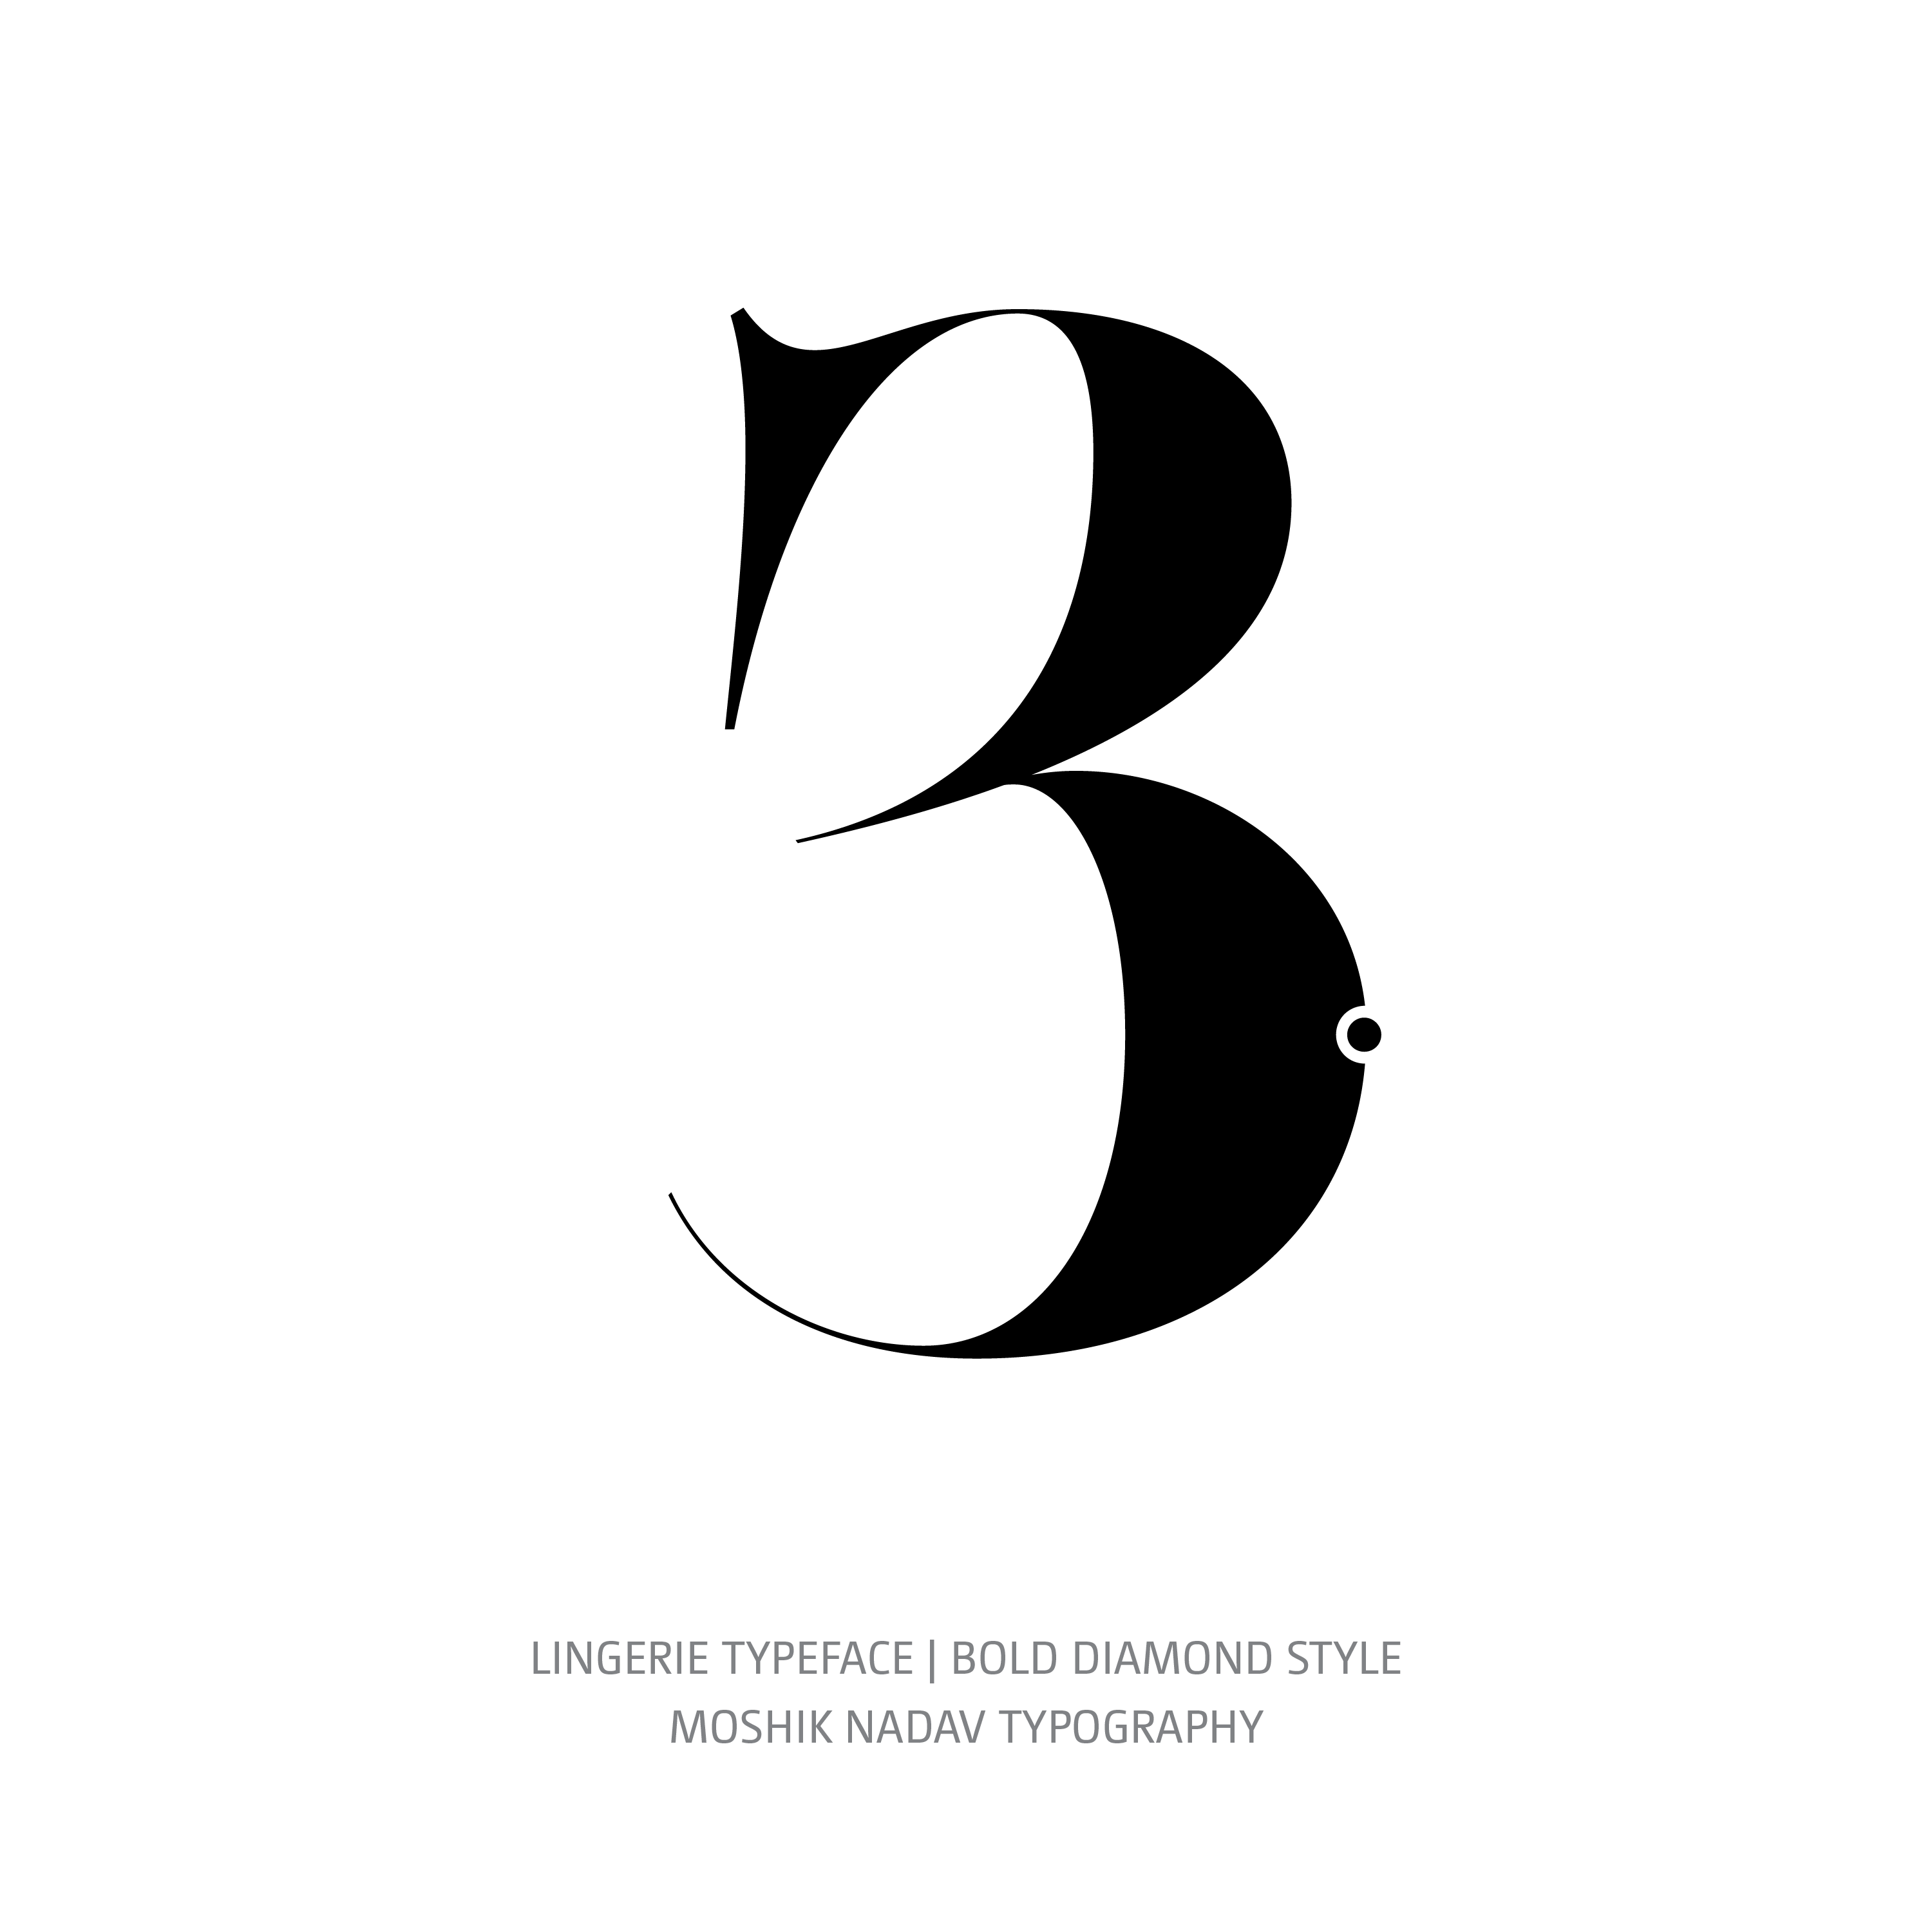 Lingerie Typeface Bold Diamond 3